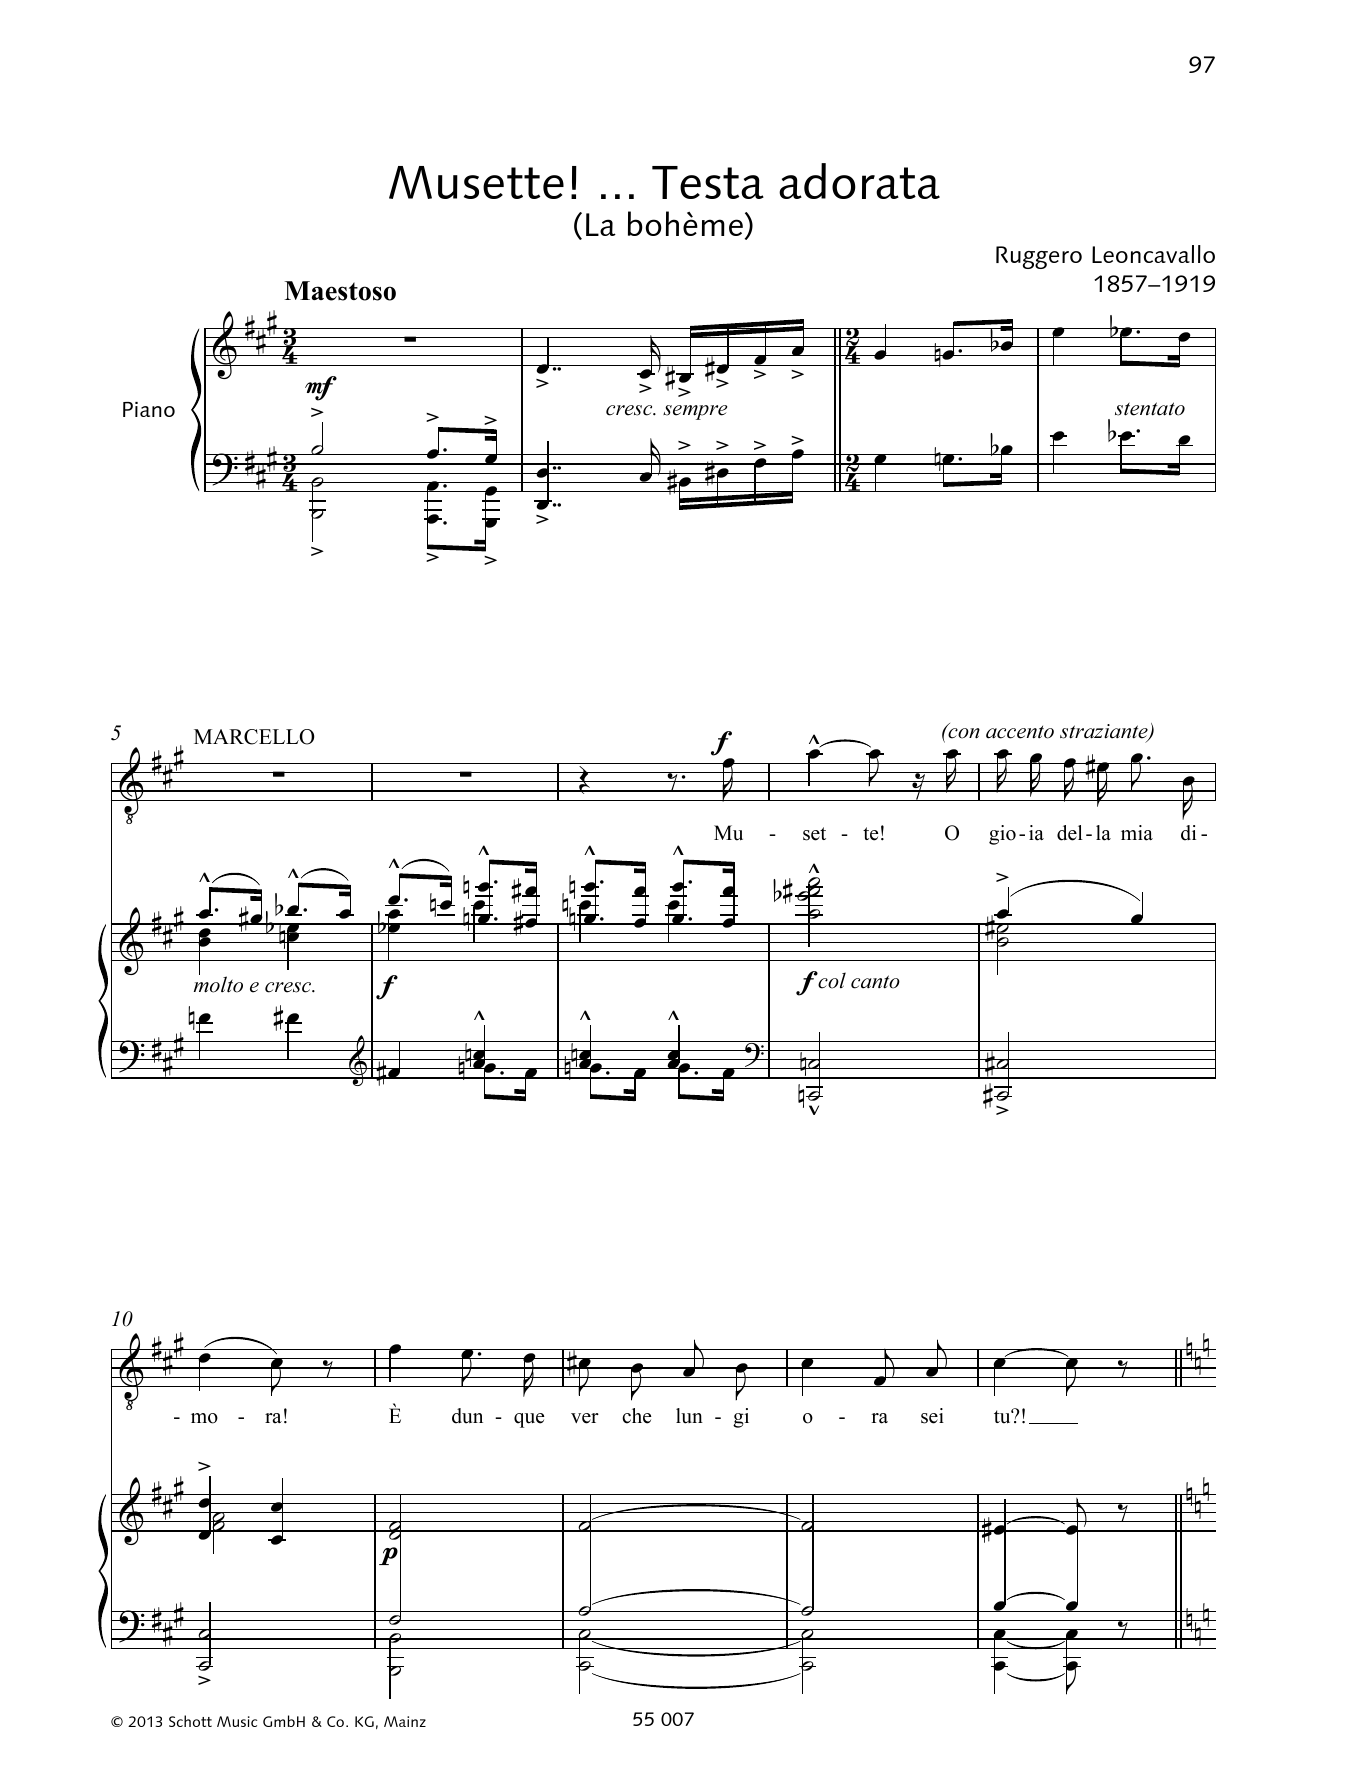 Francesca Licciarda Musette! ... Testa adorata Sheet Music Notes & Chords for Piano & Vocal - Download or Print PDF